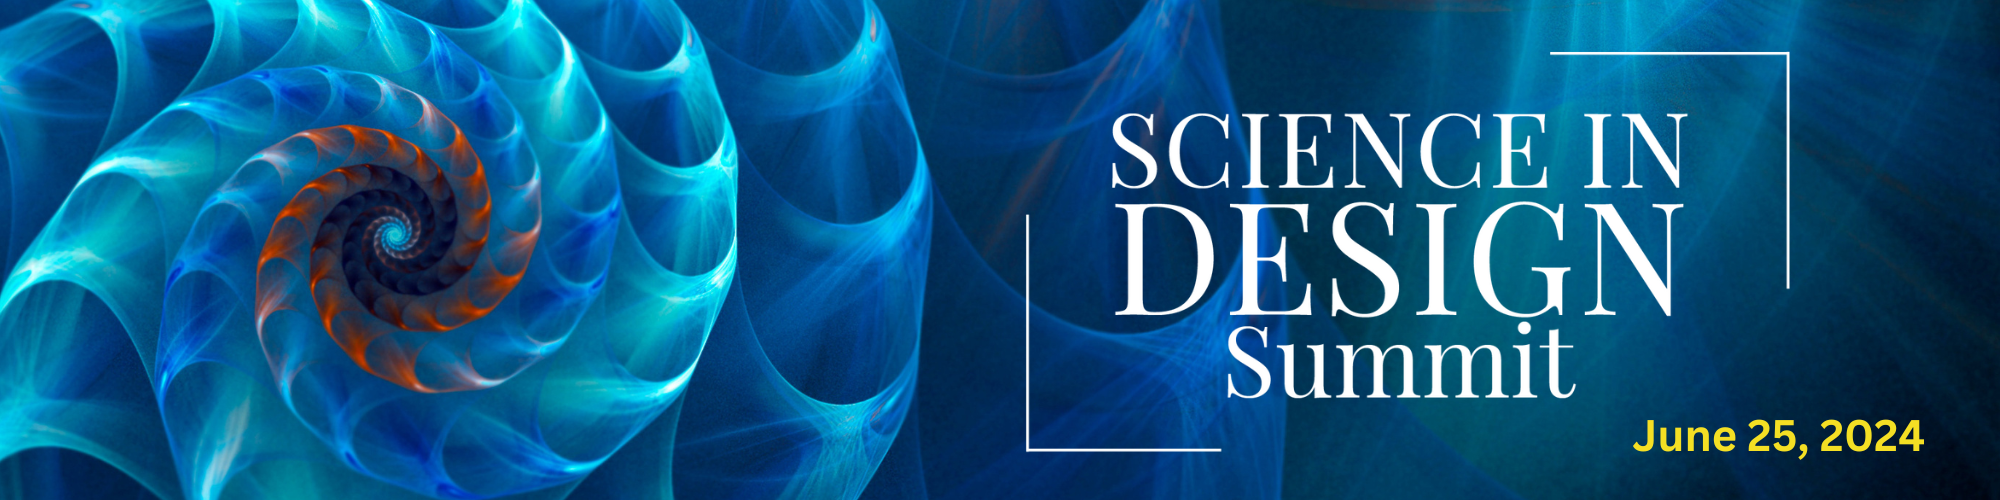 Science in Design Summit IDC Building